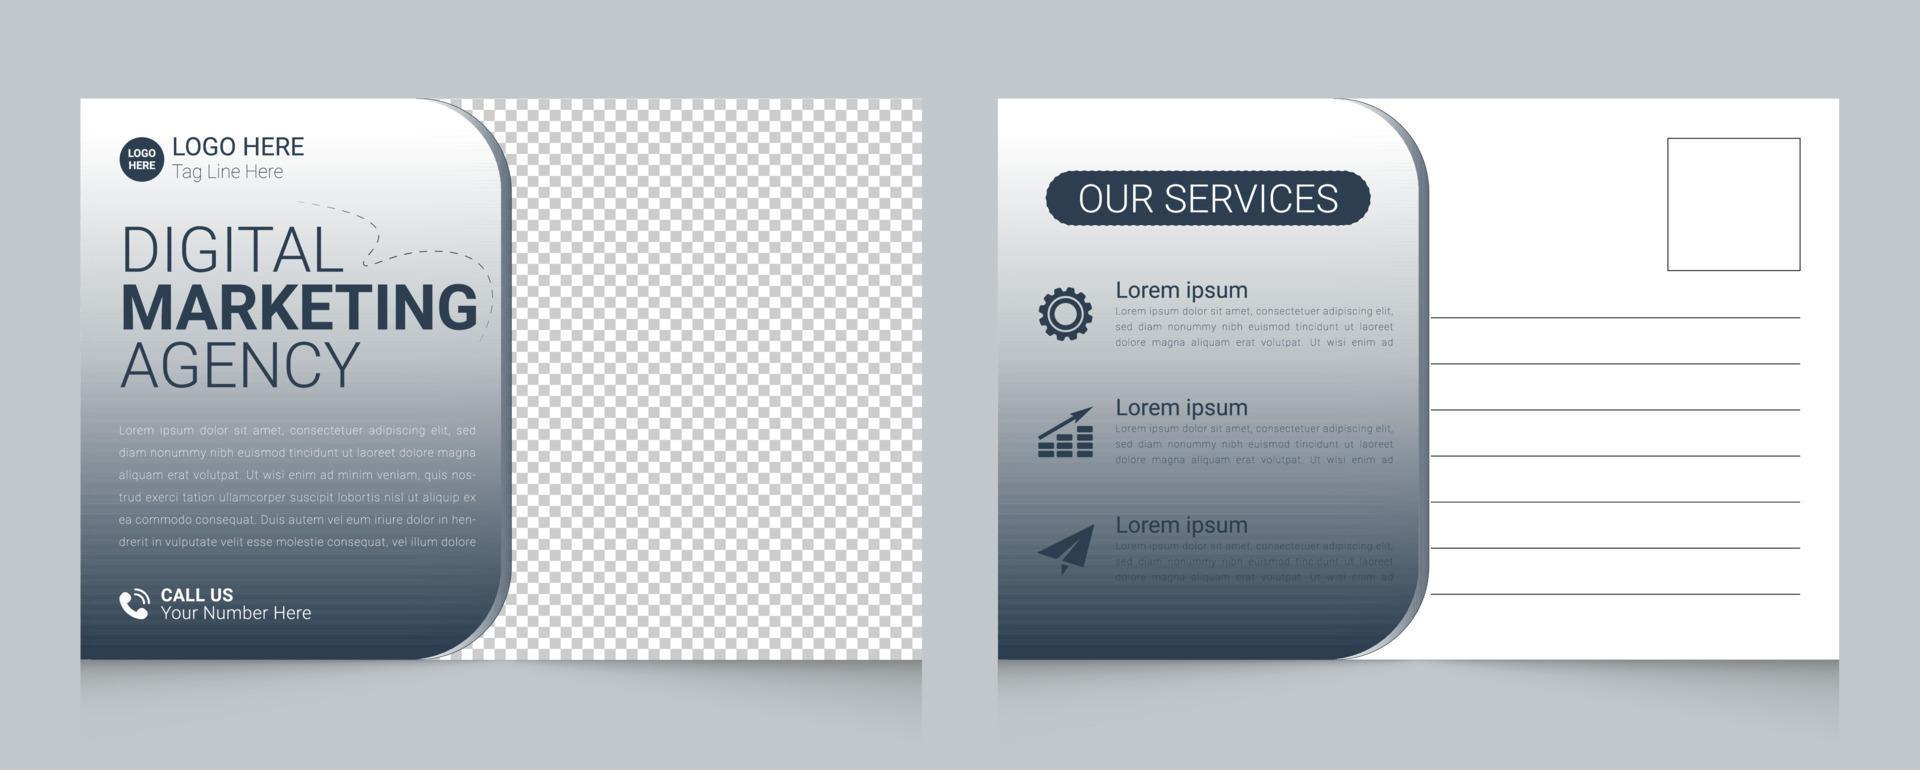 Digital marketing agency postcard template design vector